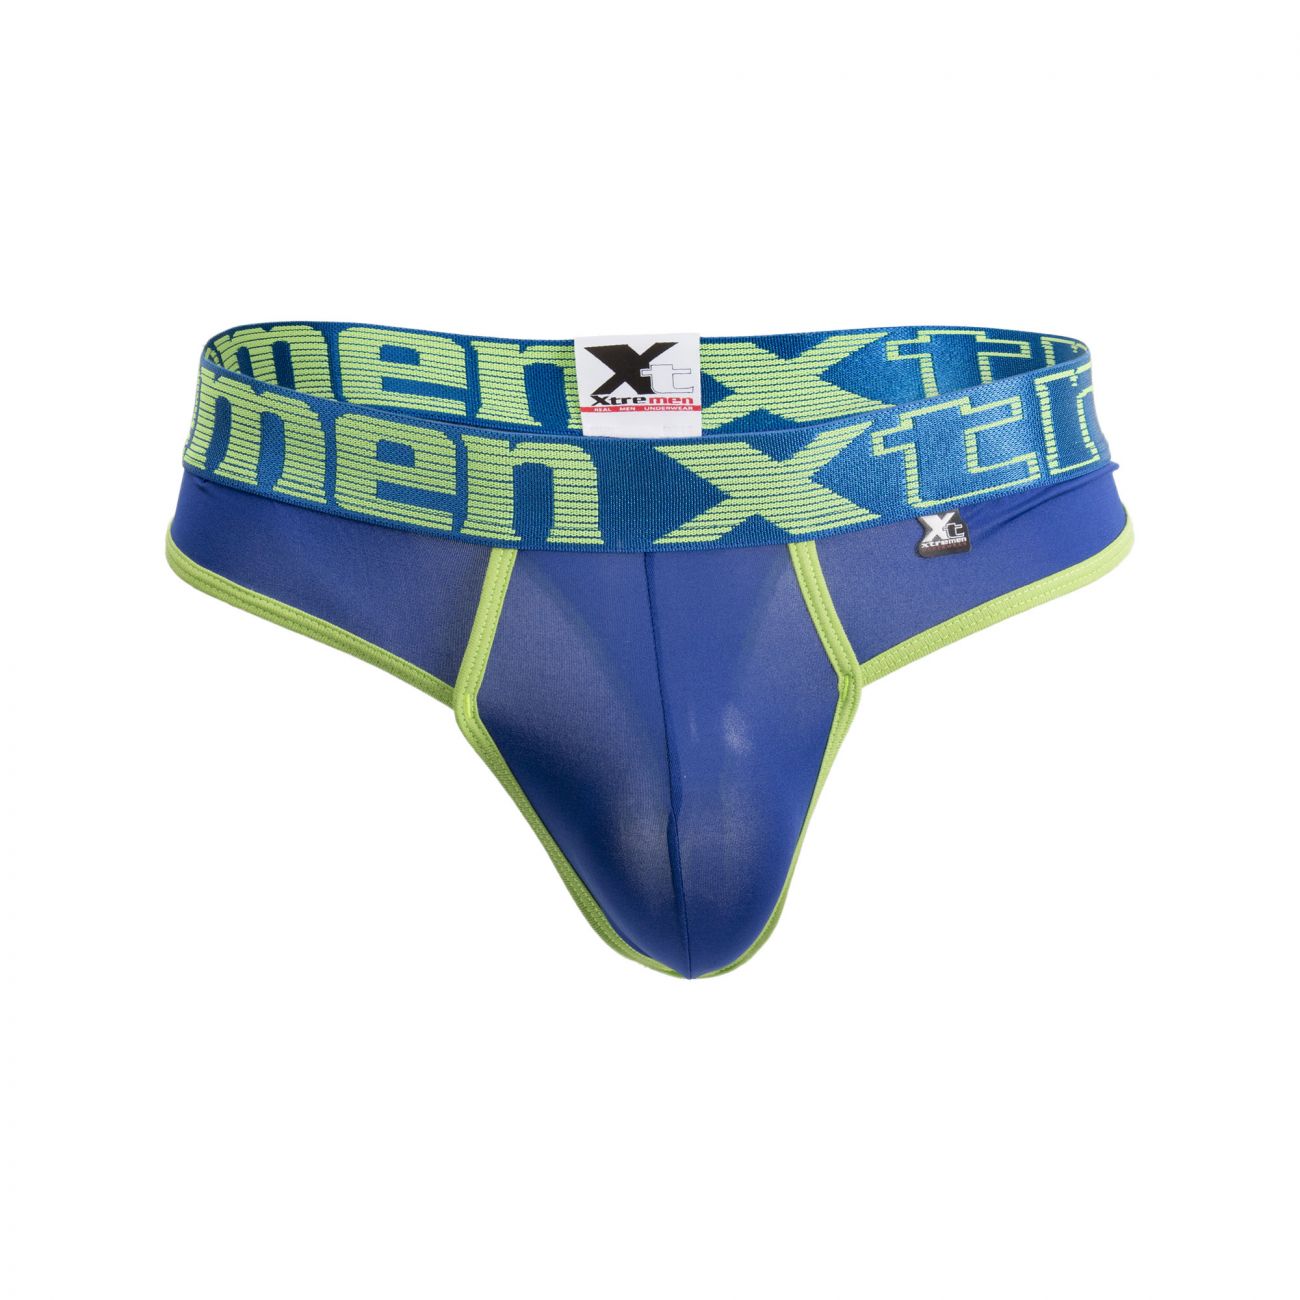 Xtremen 91031X Piping Thongs